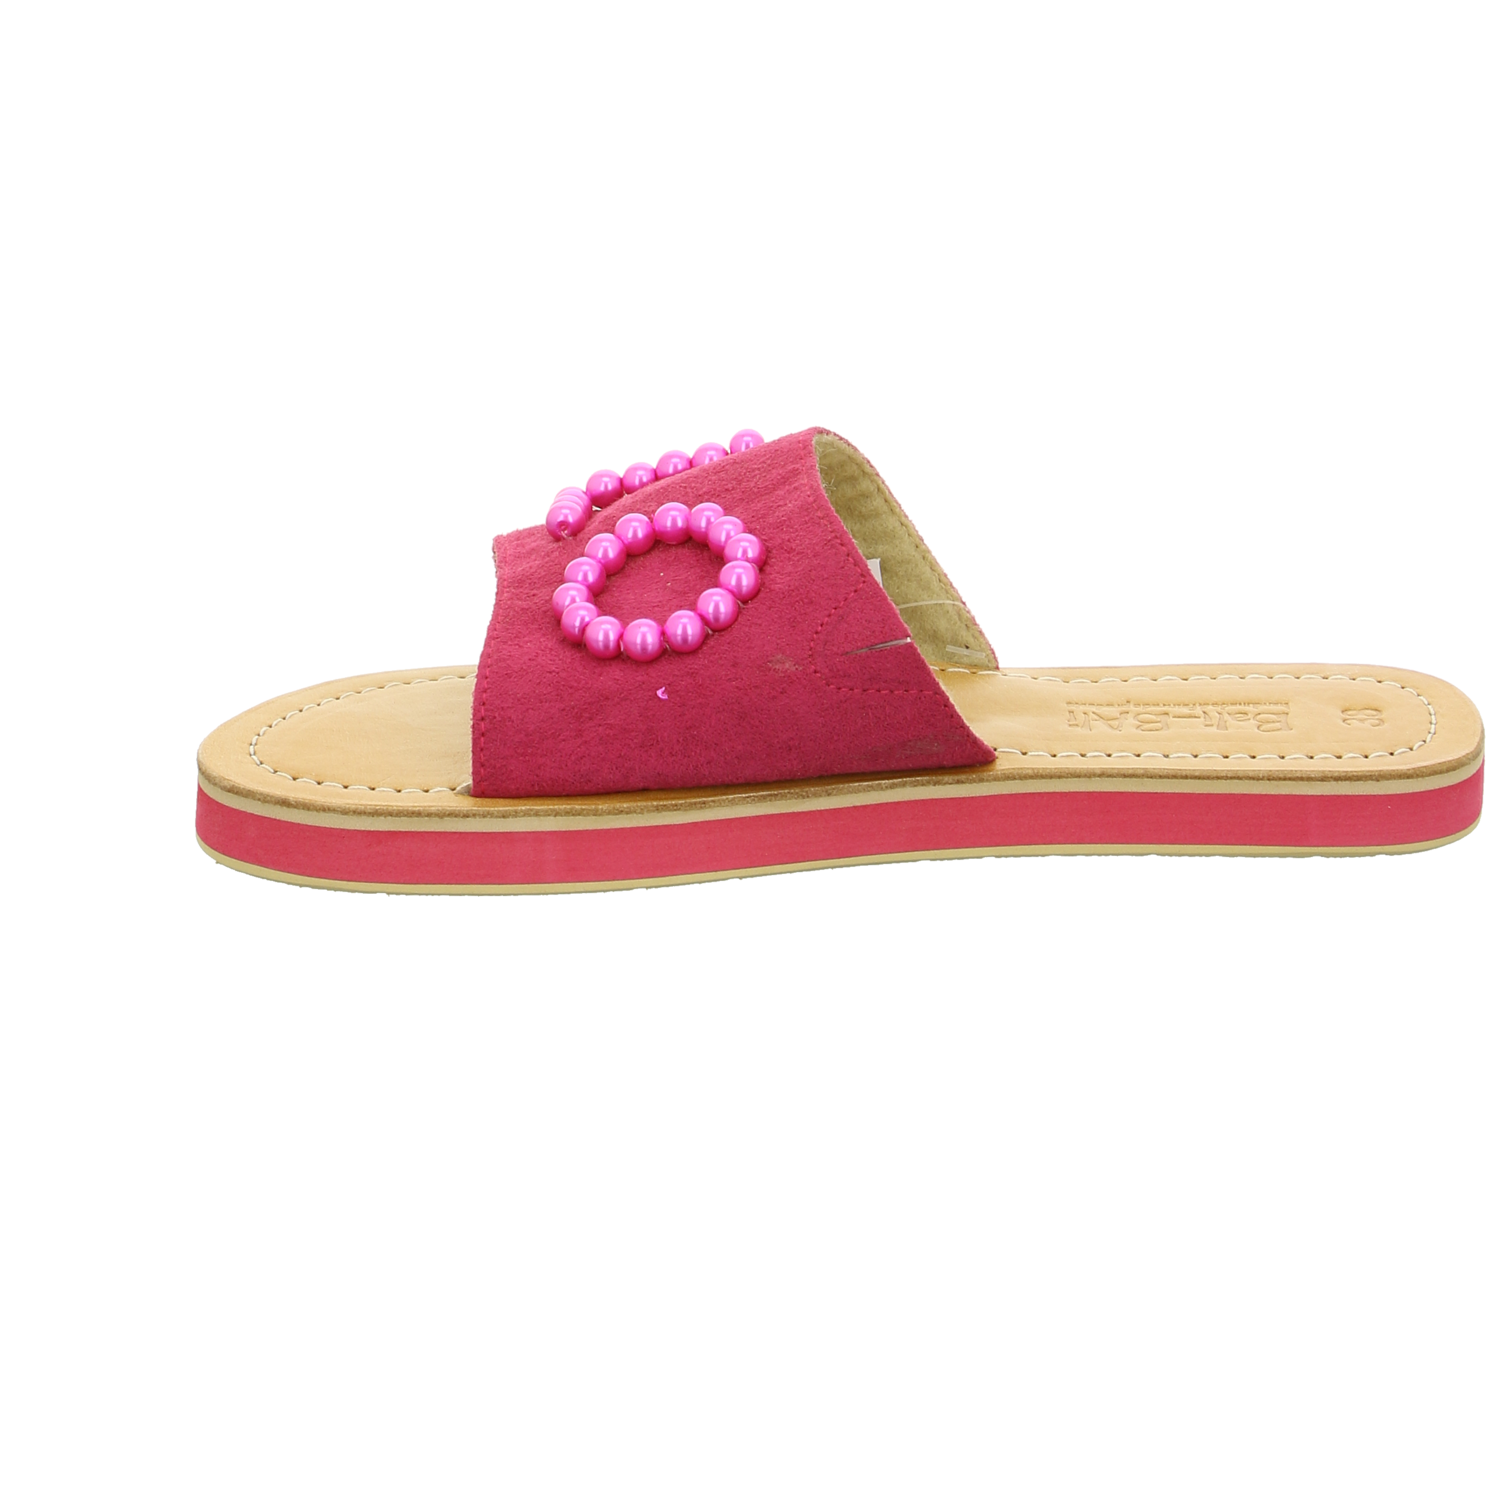 Bali Bali Sandalette bis 25 mm pink / fuchsia